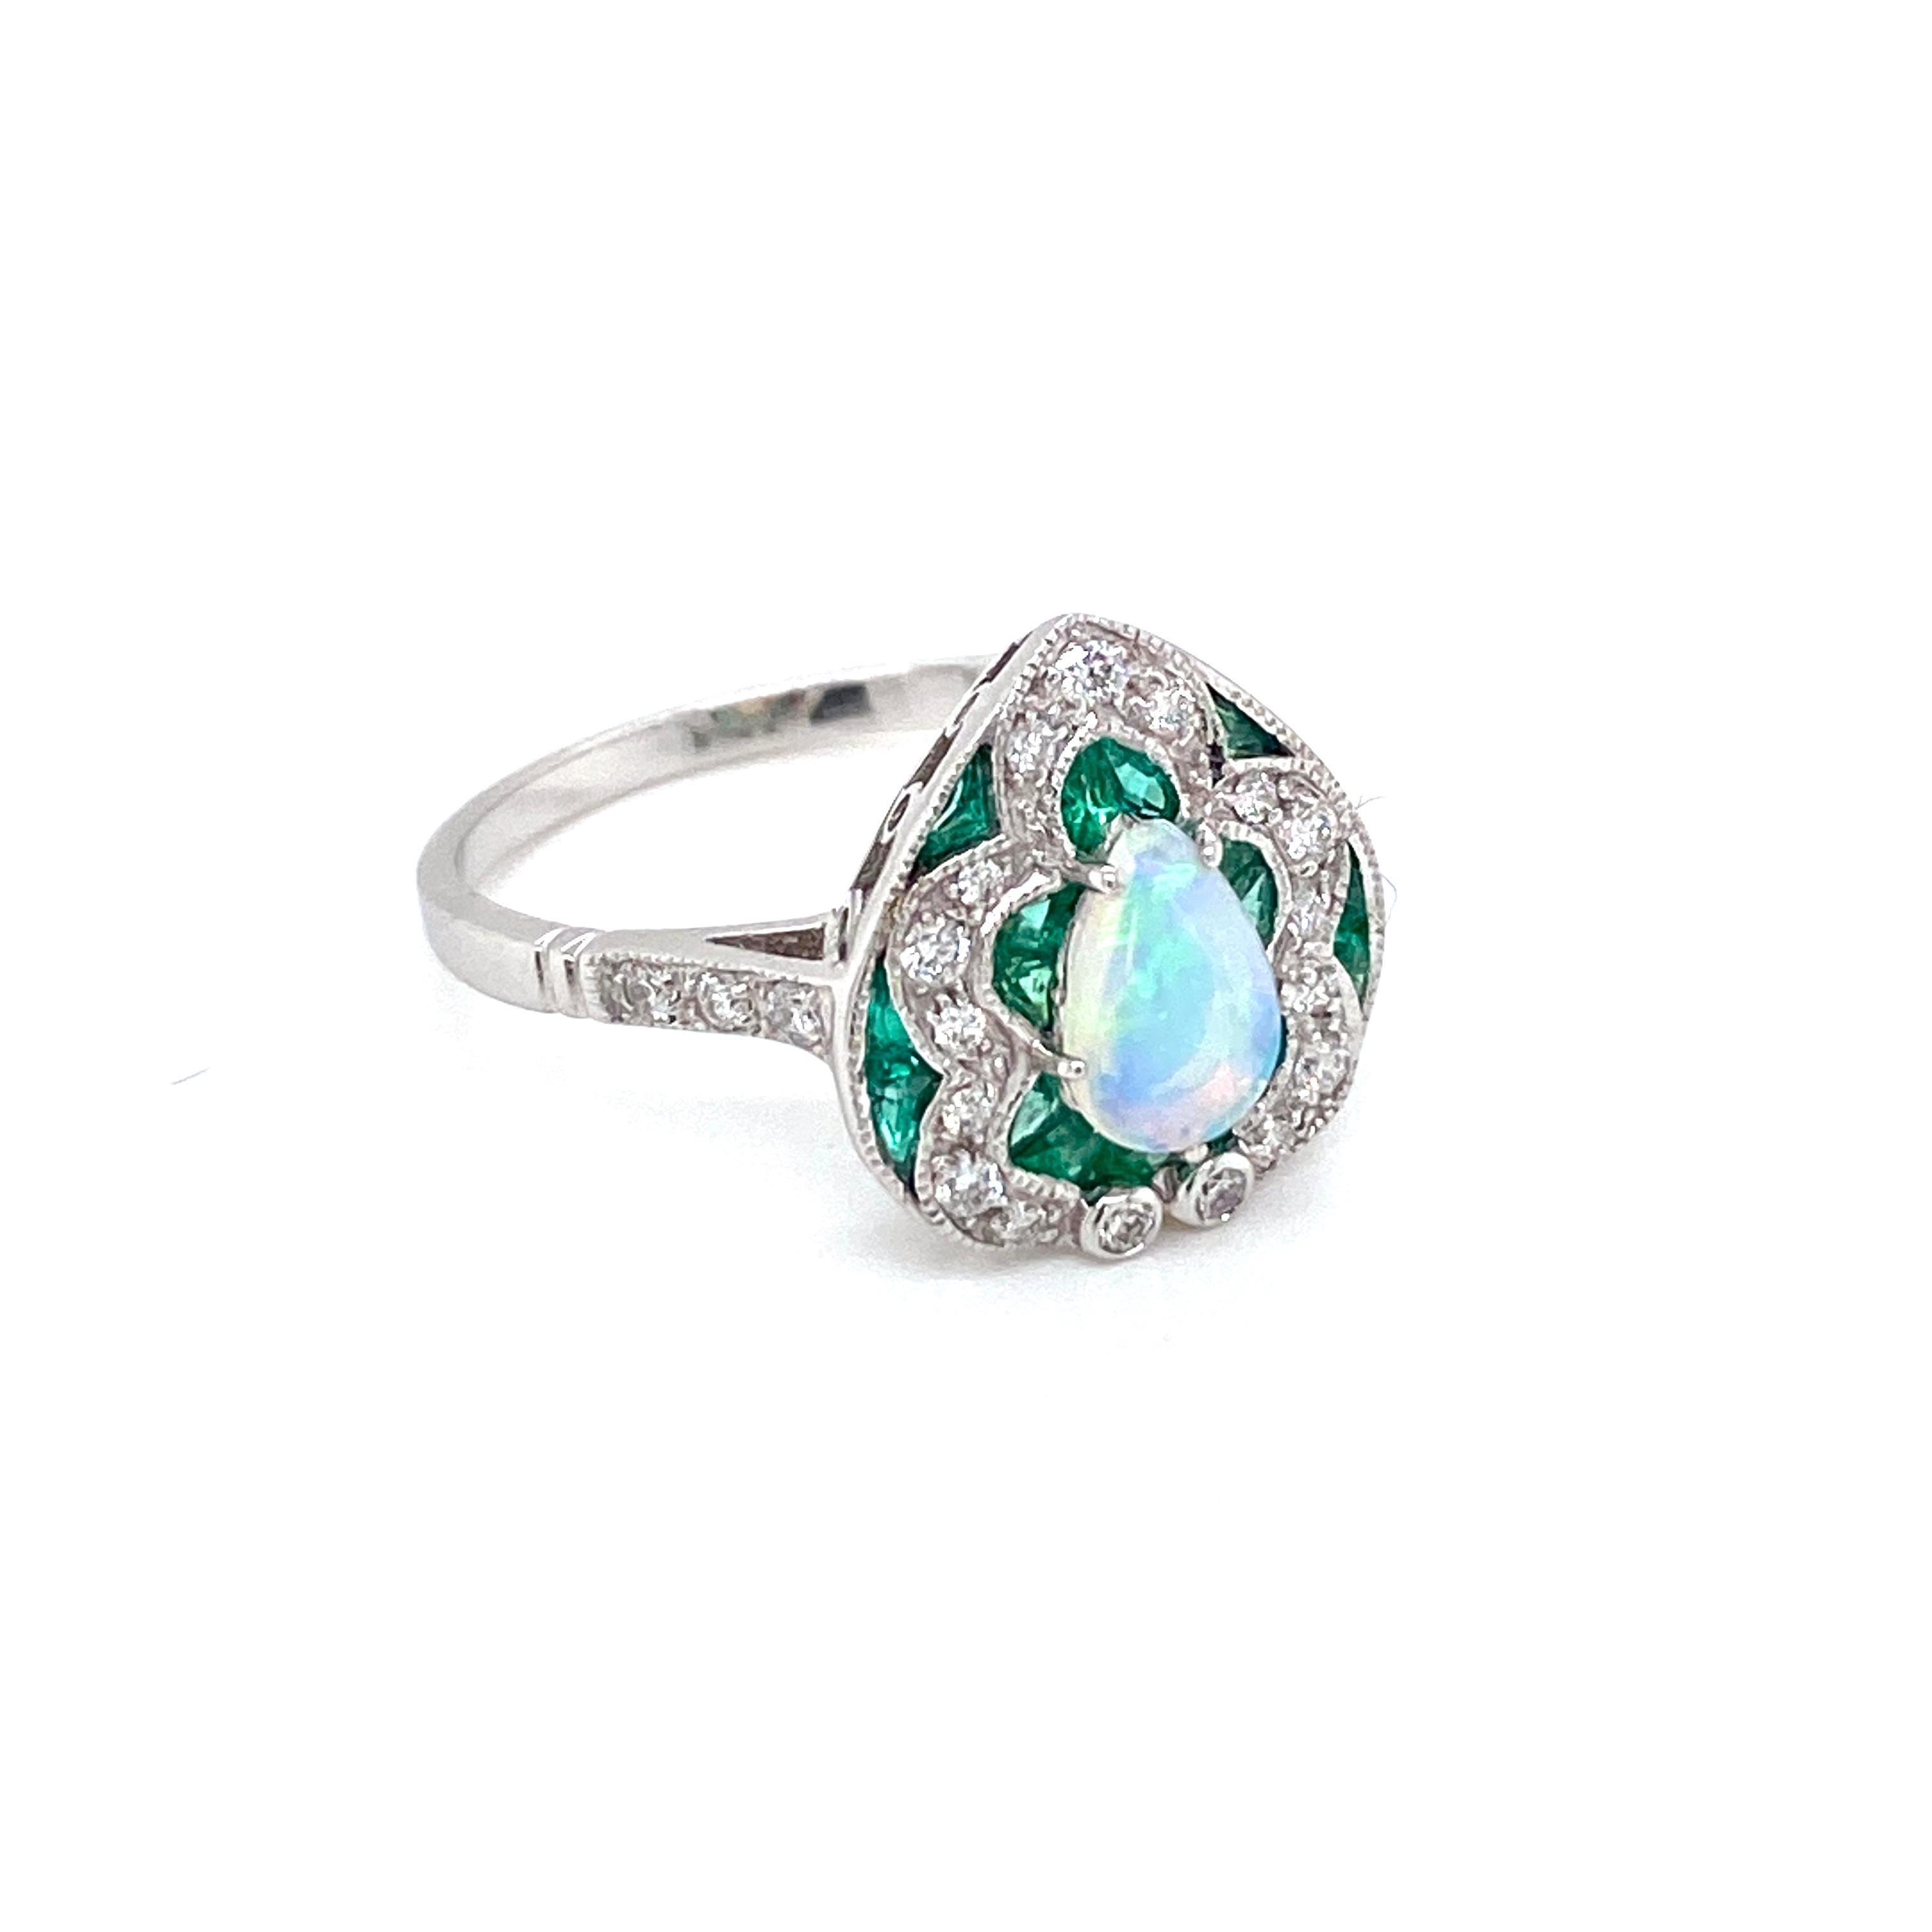 Mixed Cut Art Deco Style Opal Diamond Emerald Cocktail Ring Estate Fine Jewelry